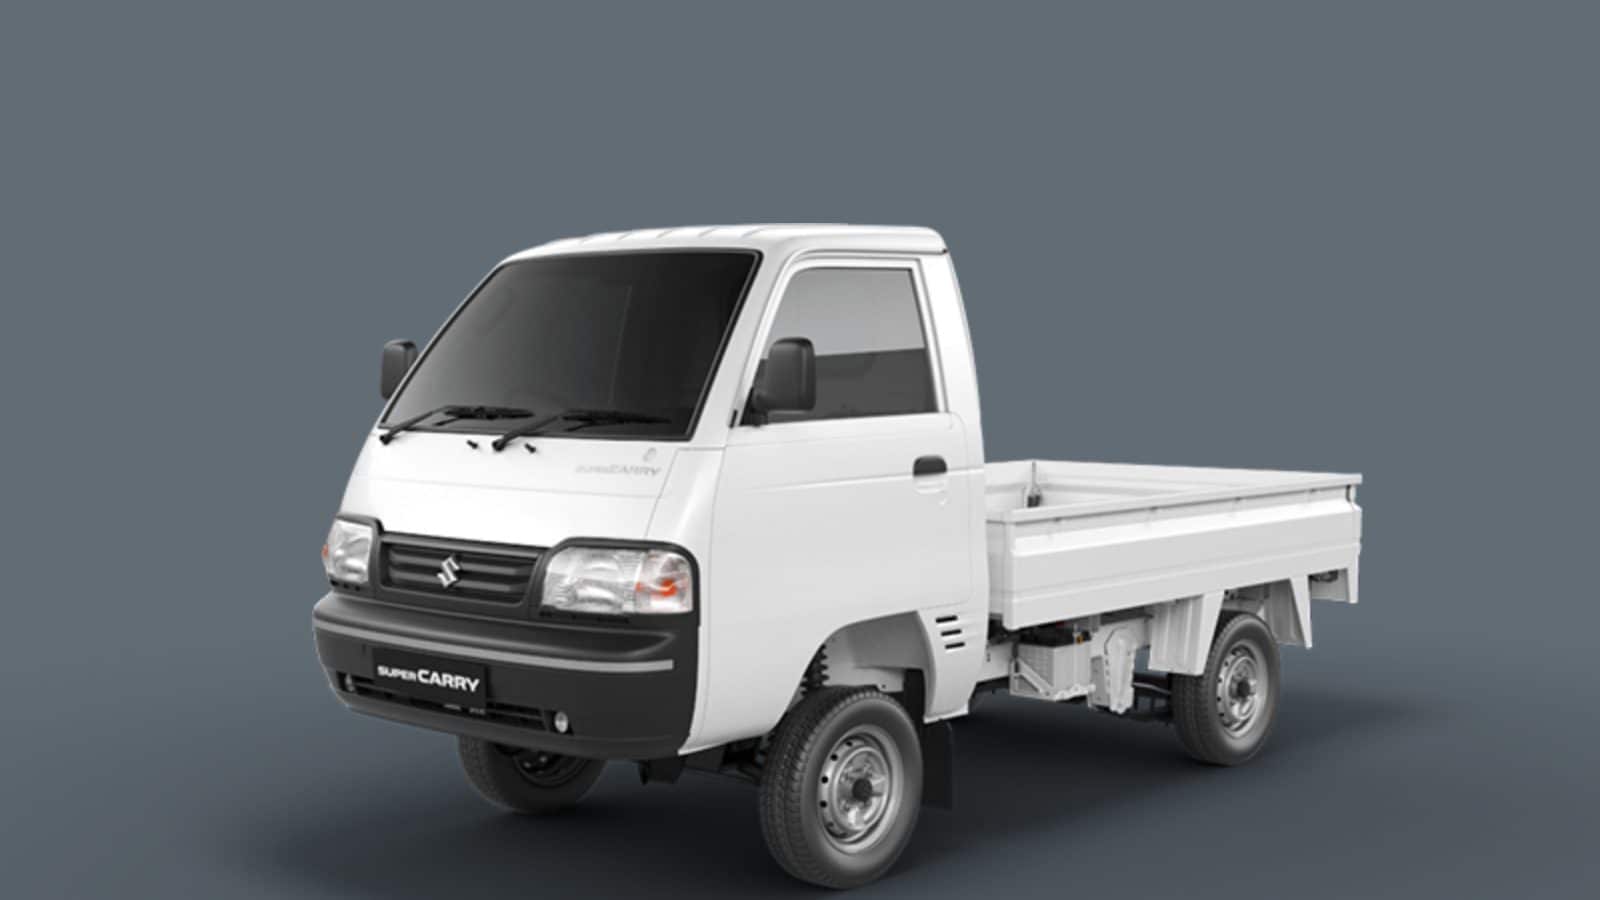 Maruti Suzuki Super Carry Achieves 1 Lakh Sales Milestone in 5